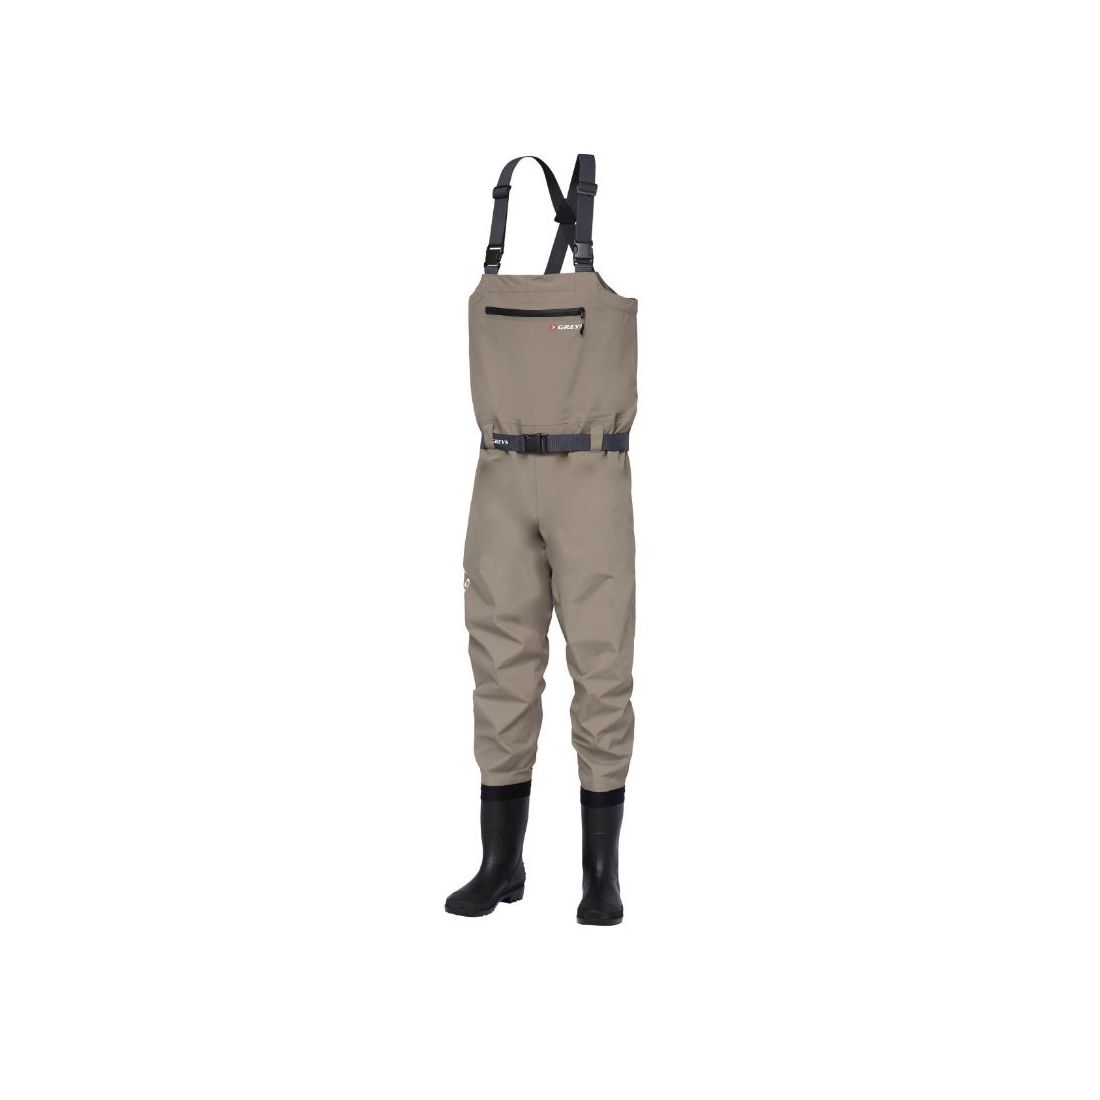 Greys Fin Waterproof Fishing Trousers - SAVE 10